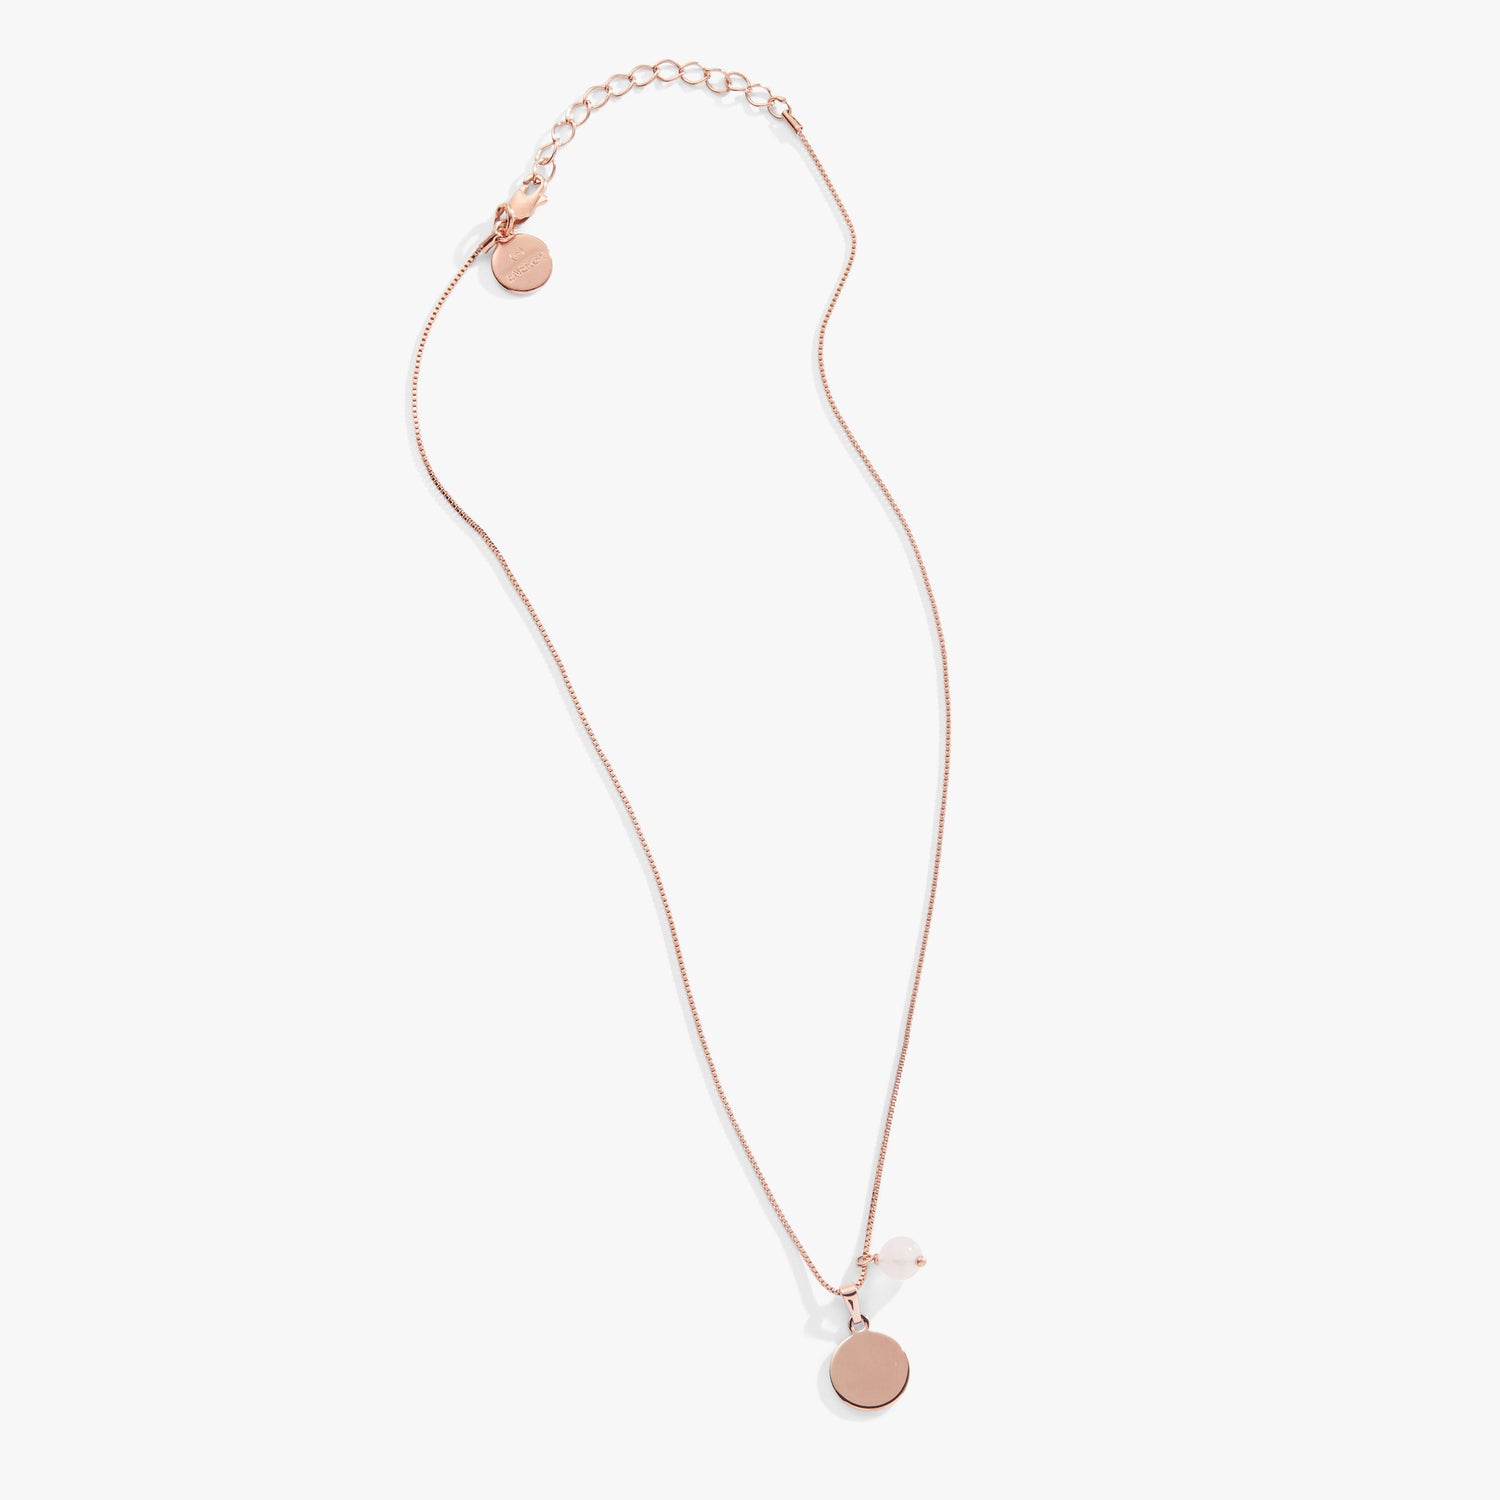 Circle Charm + Rose Quartz Bead Necklace